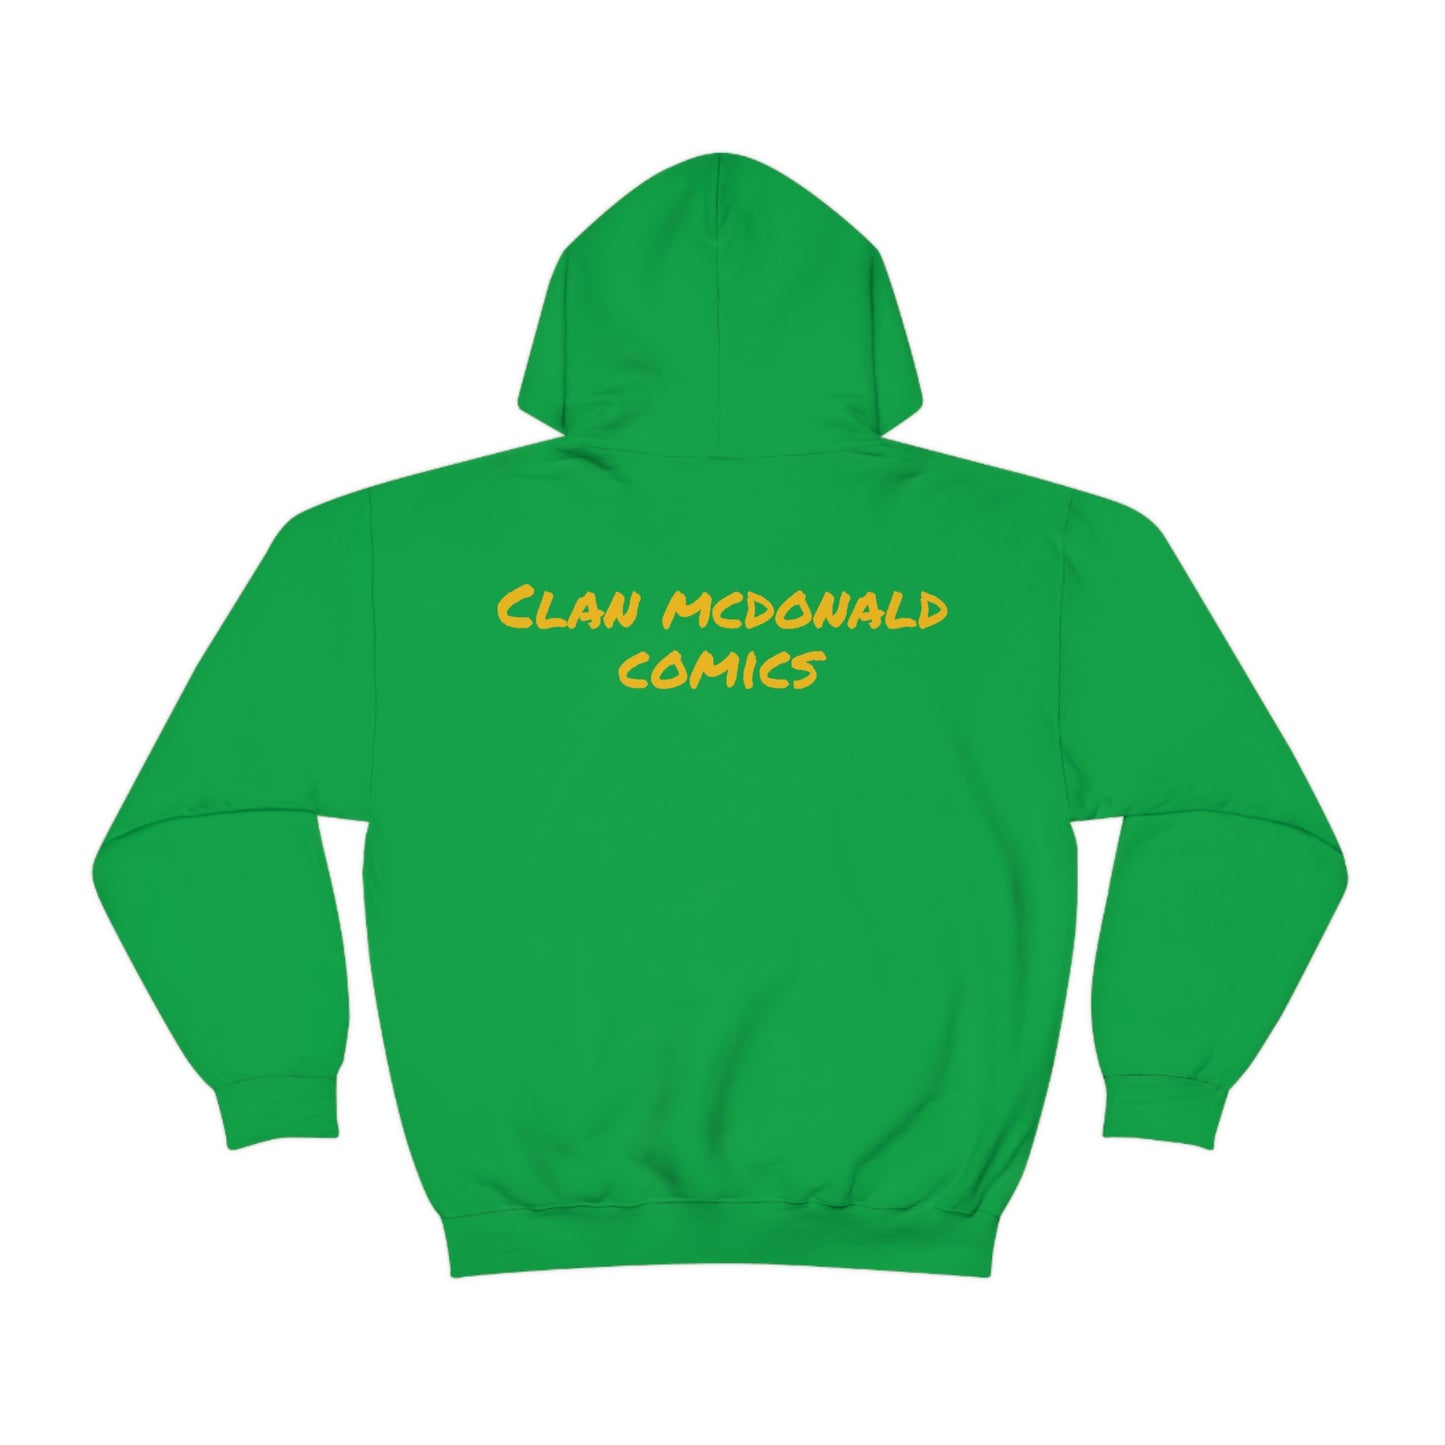 Clan McDonald Comics Hooded Sweatshirt